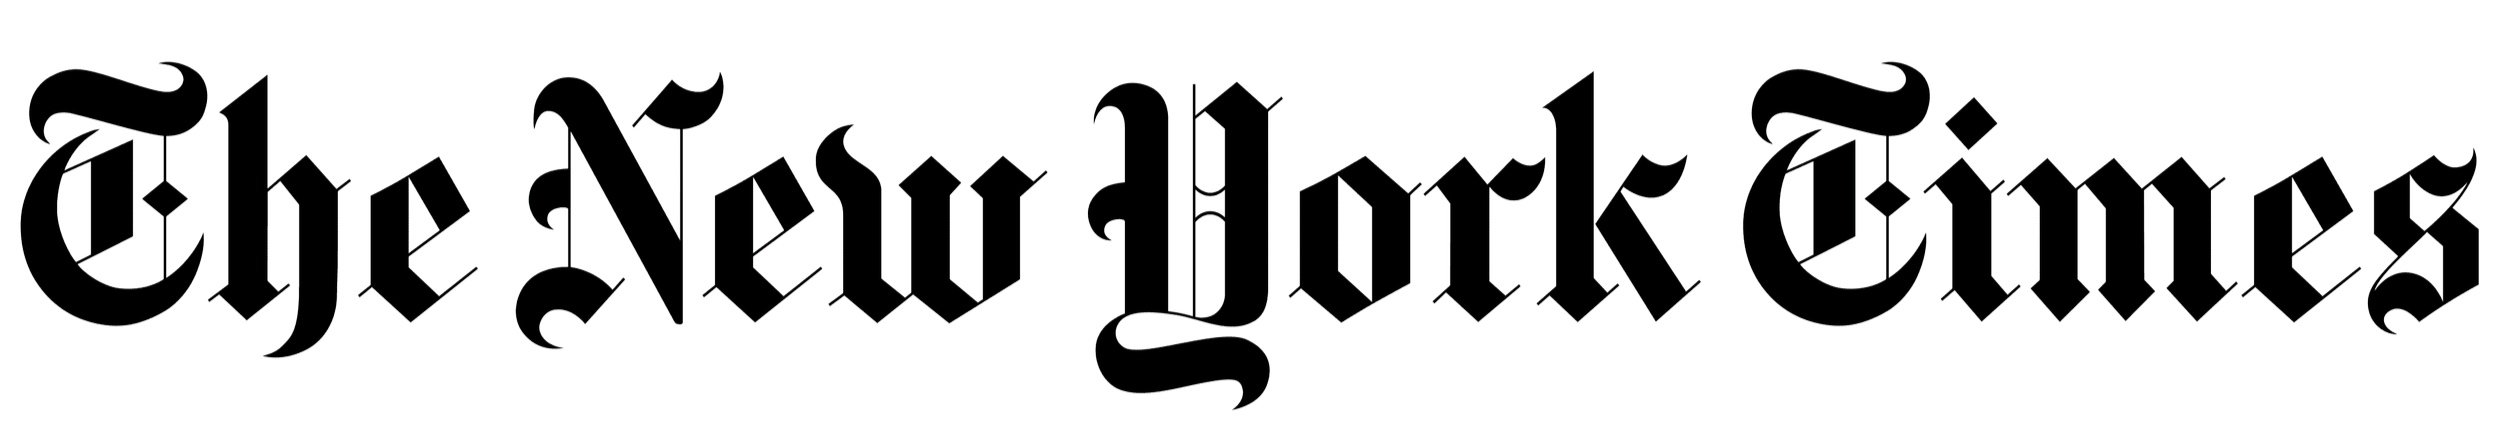 New-York-Times-logo.jpg